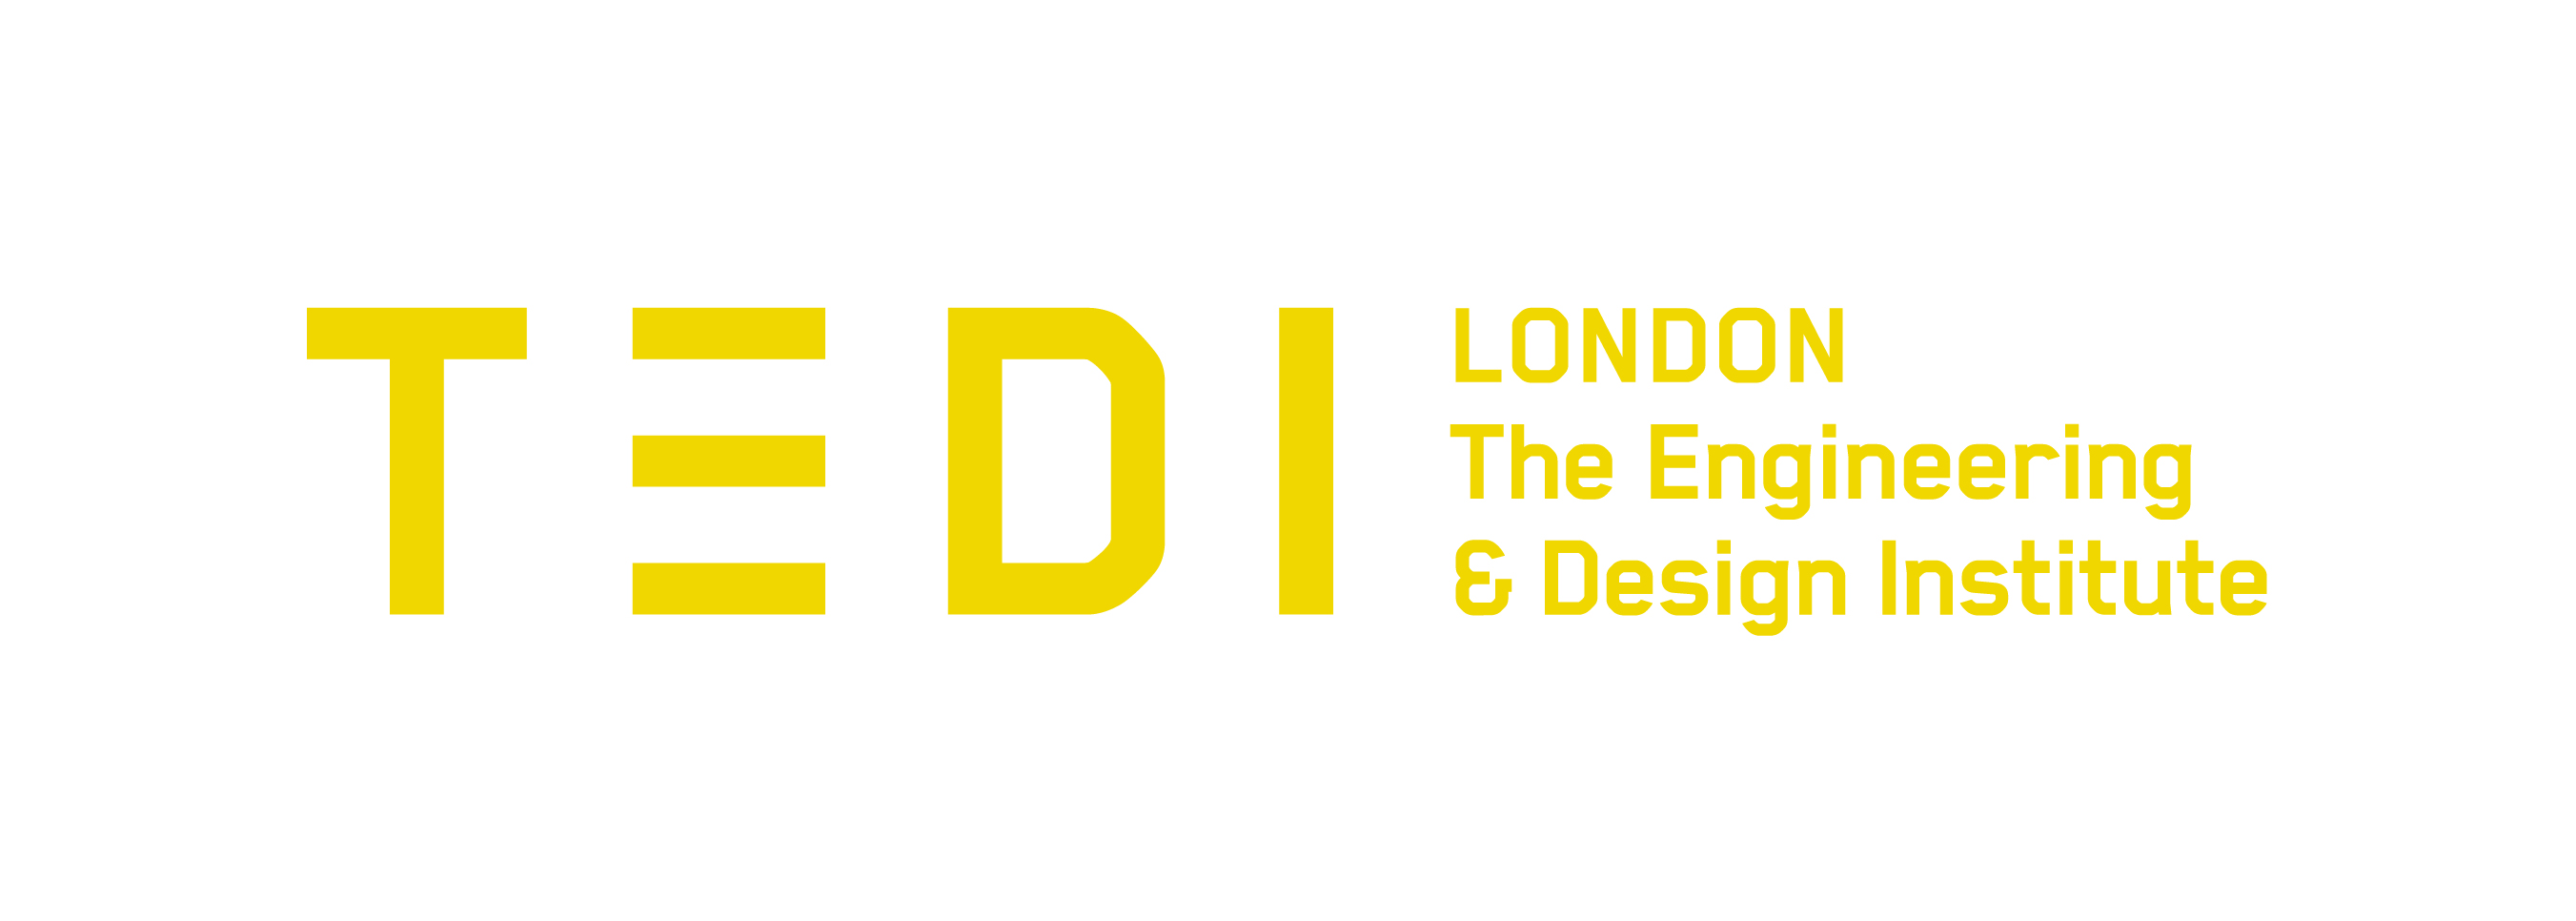 The Engineering & Design Institute (TEDI-London) logo in yellow